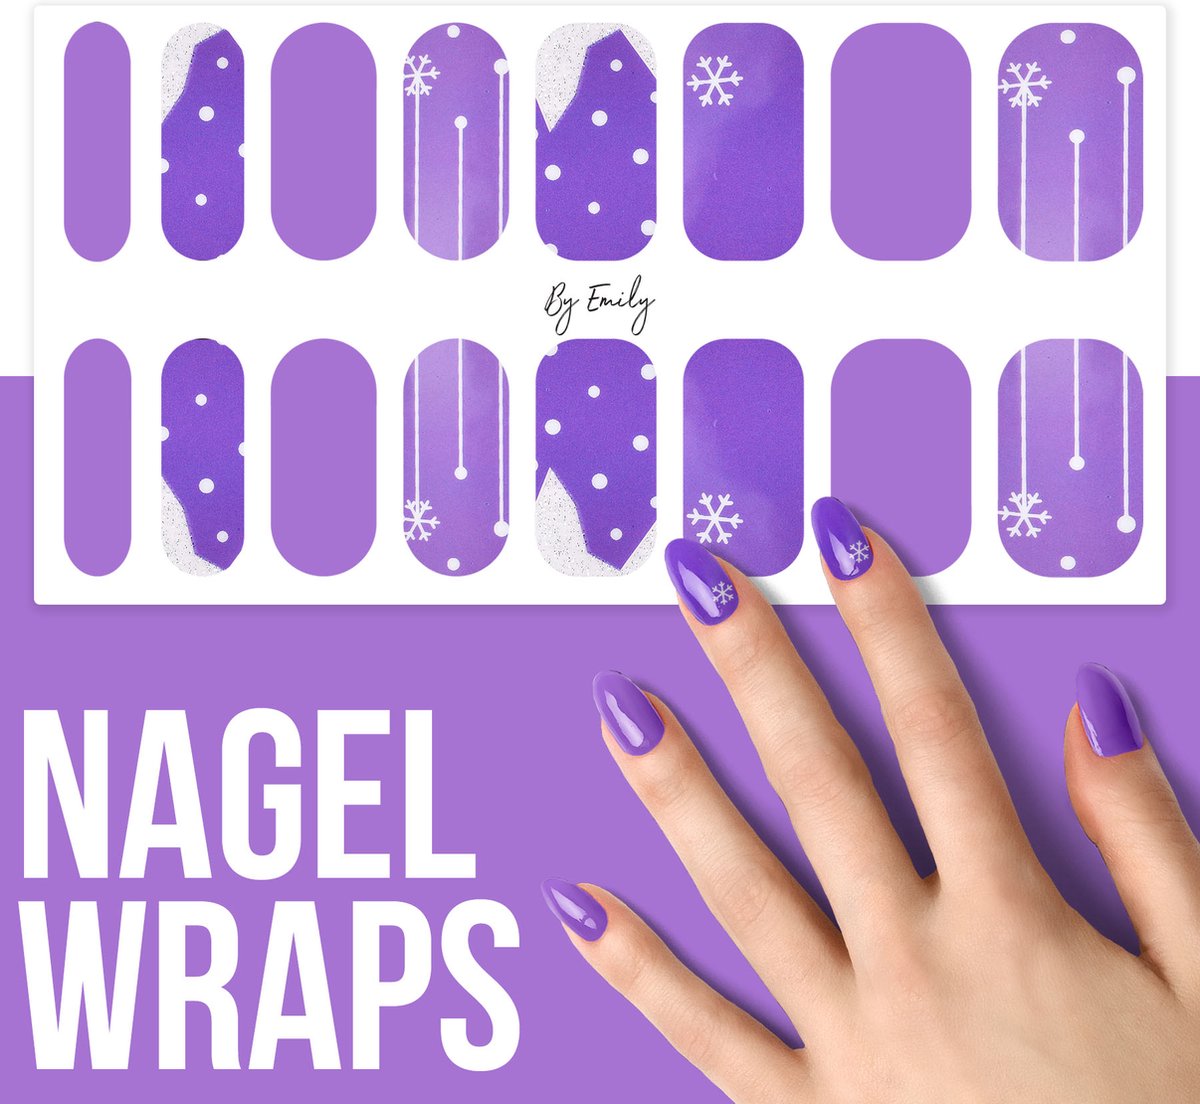 By Emily Nagel wrap Once in Purple Moederdag cadeaus 16 stickers Nail wrap Nail art Trendy Design Nagellakvrij Eenvoudig Nagel wrap Nagel stickers Folie Zelfklevend Sjablonen